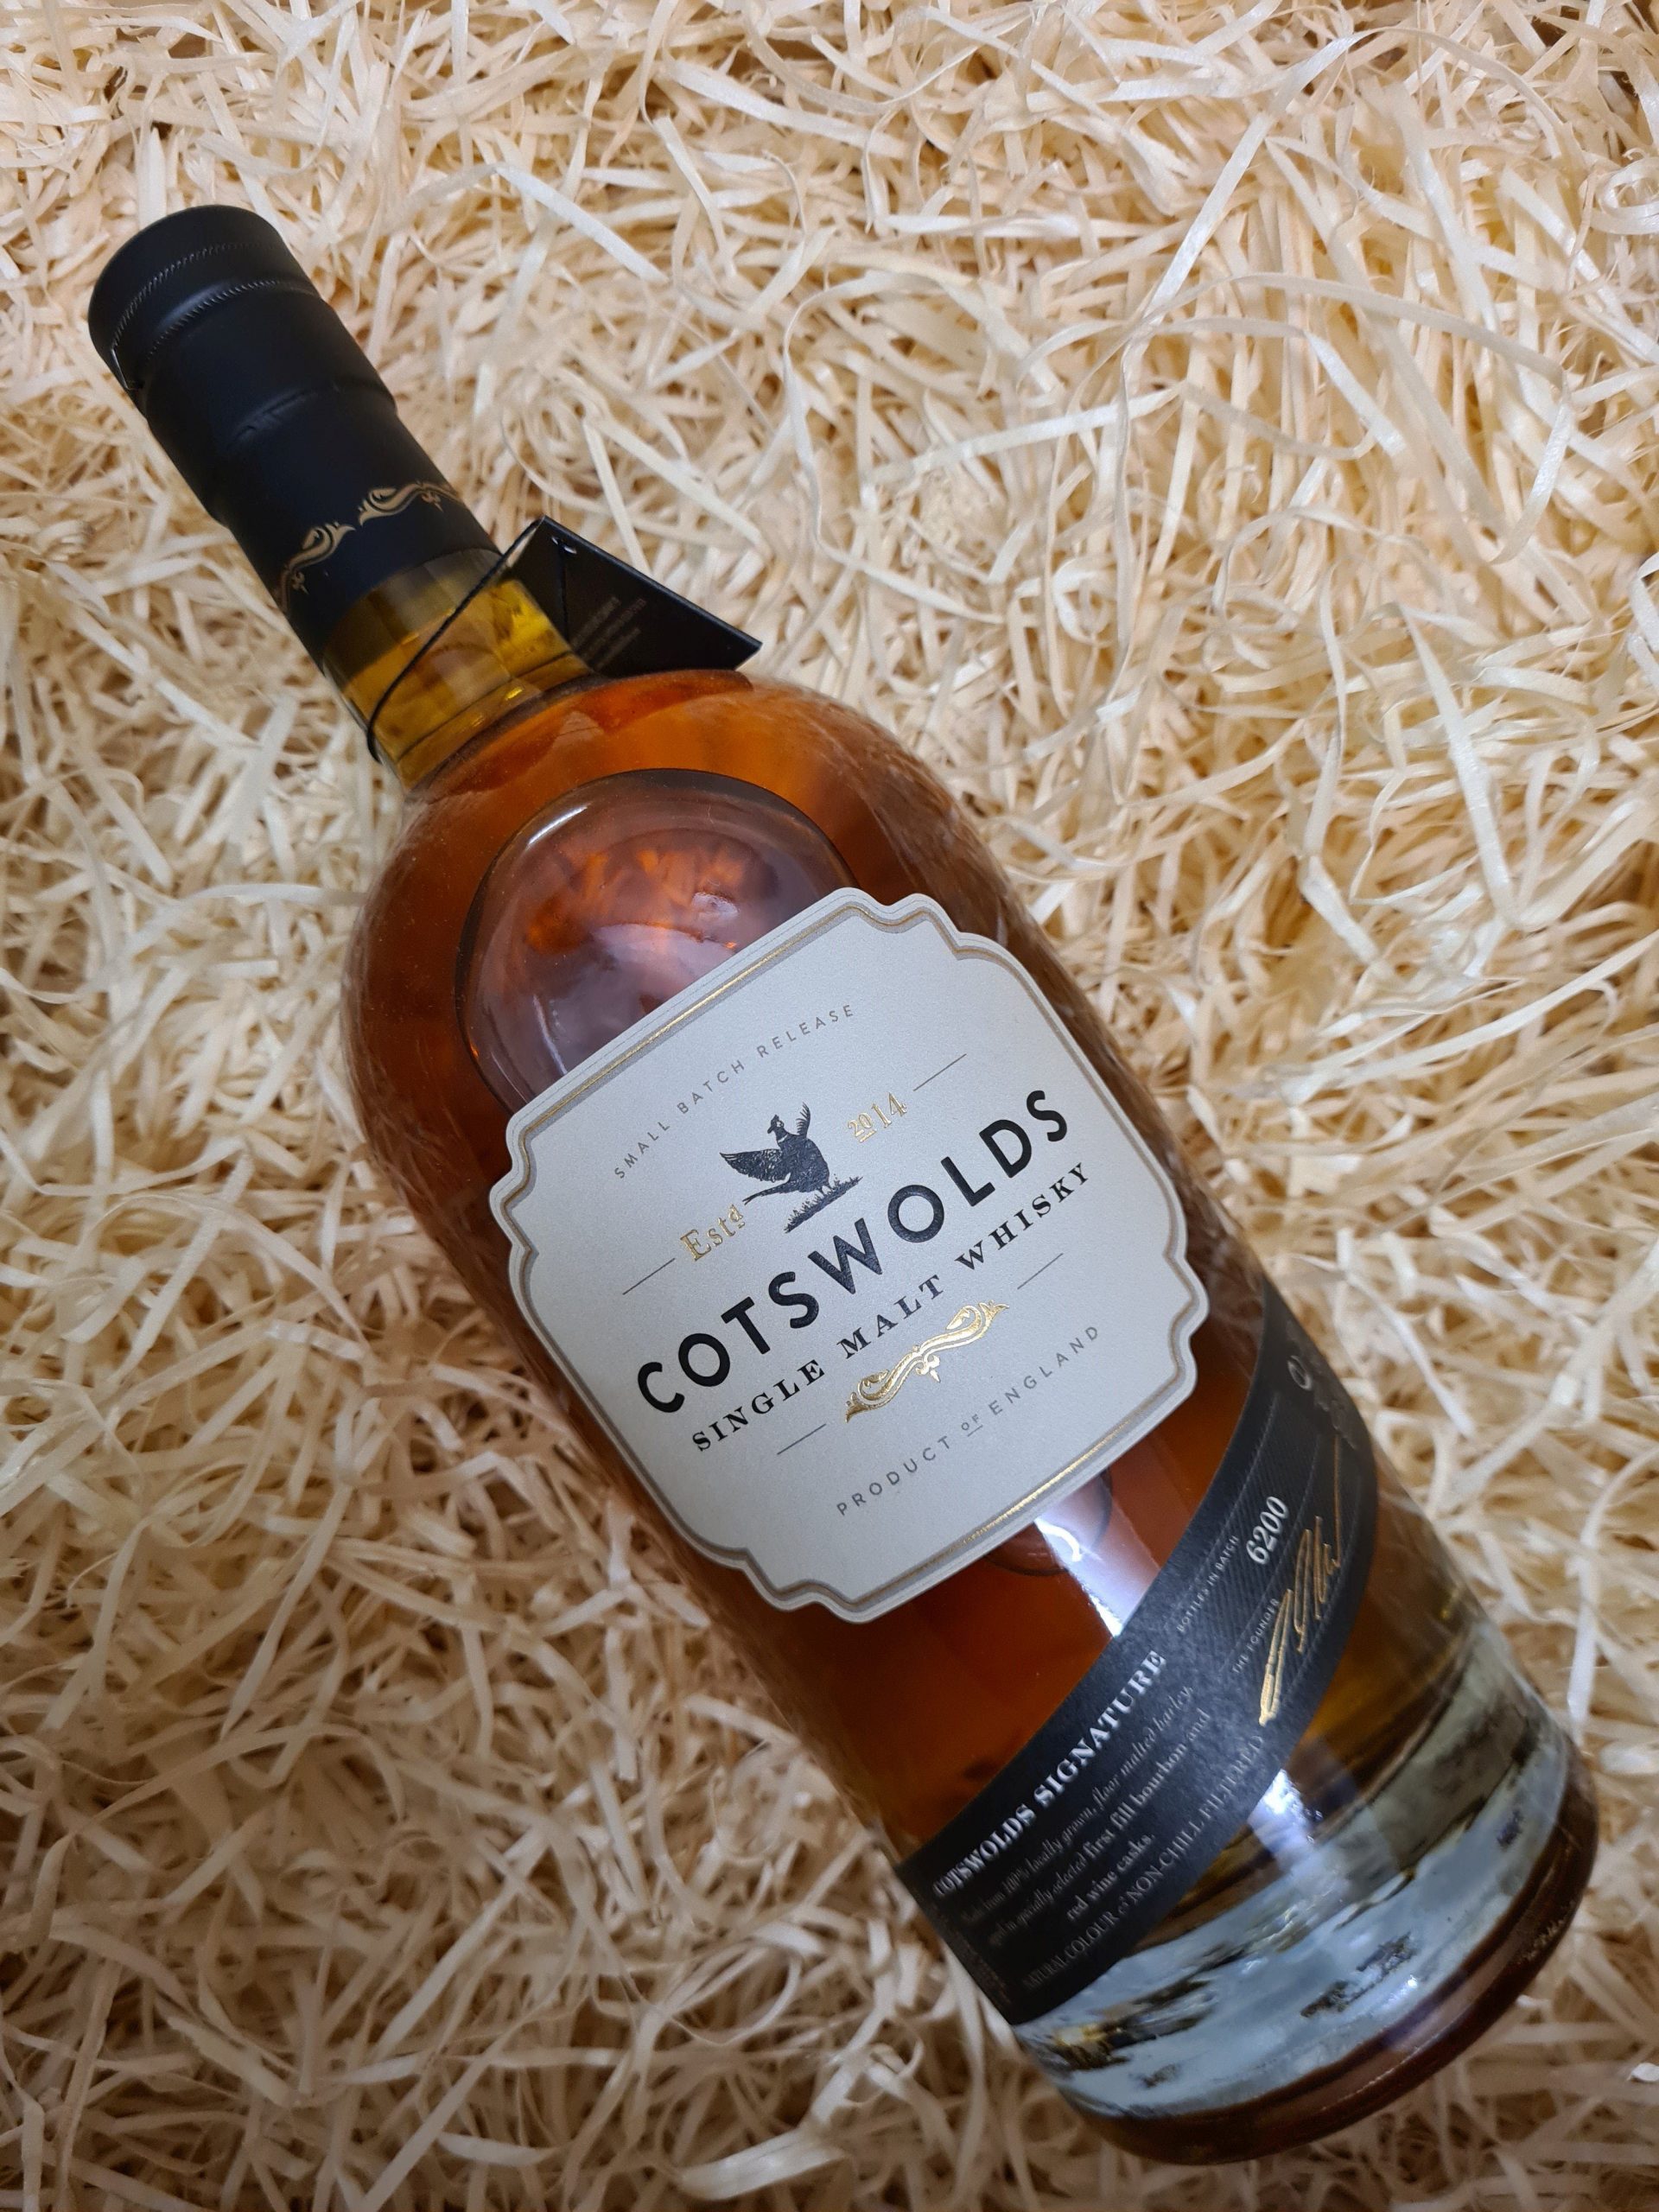 Cotswolds Signature Single Malt Whisky